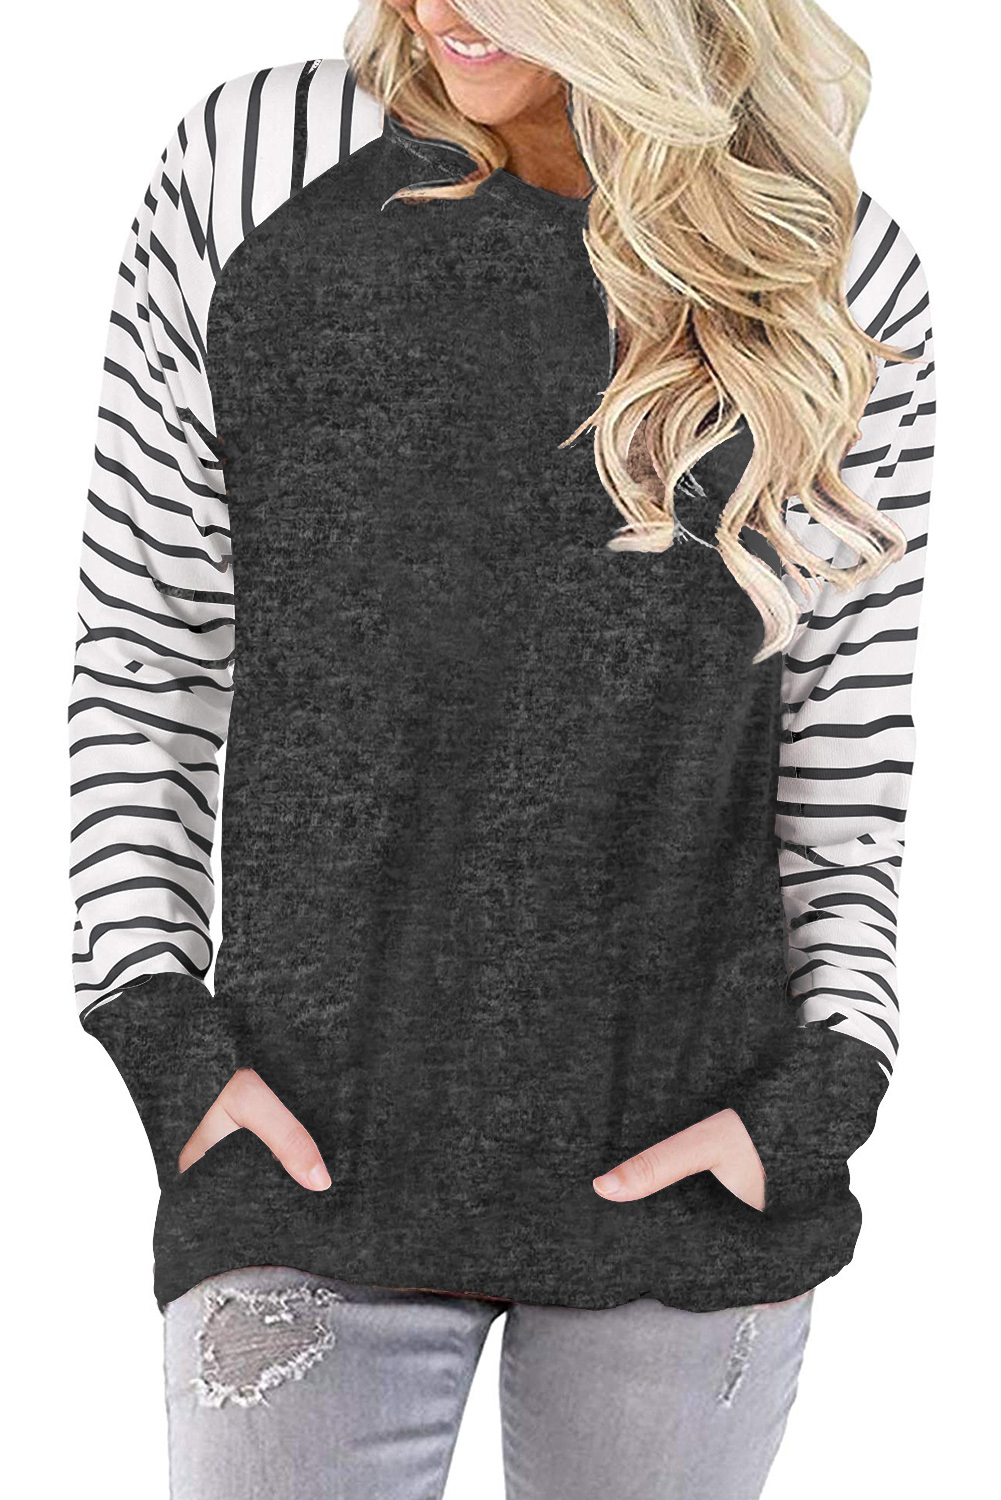 US$ 7.94 Drop-shipping Gray Pocketed Striped Raglan Sleeves Sweatshirt ...